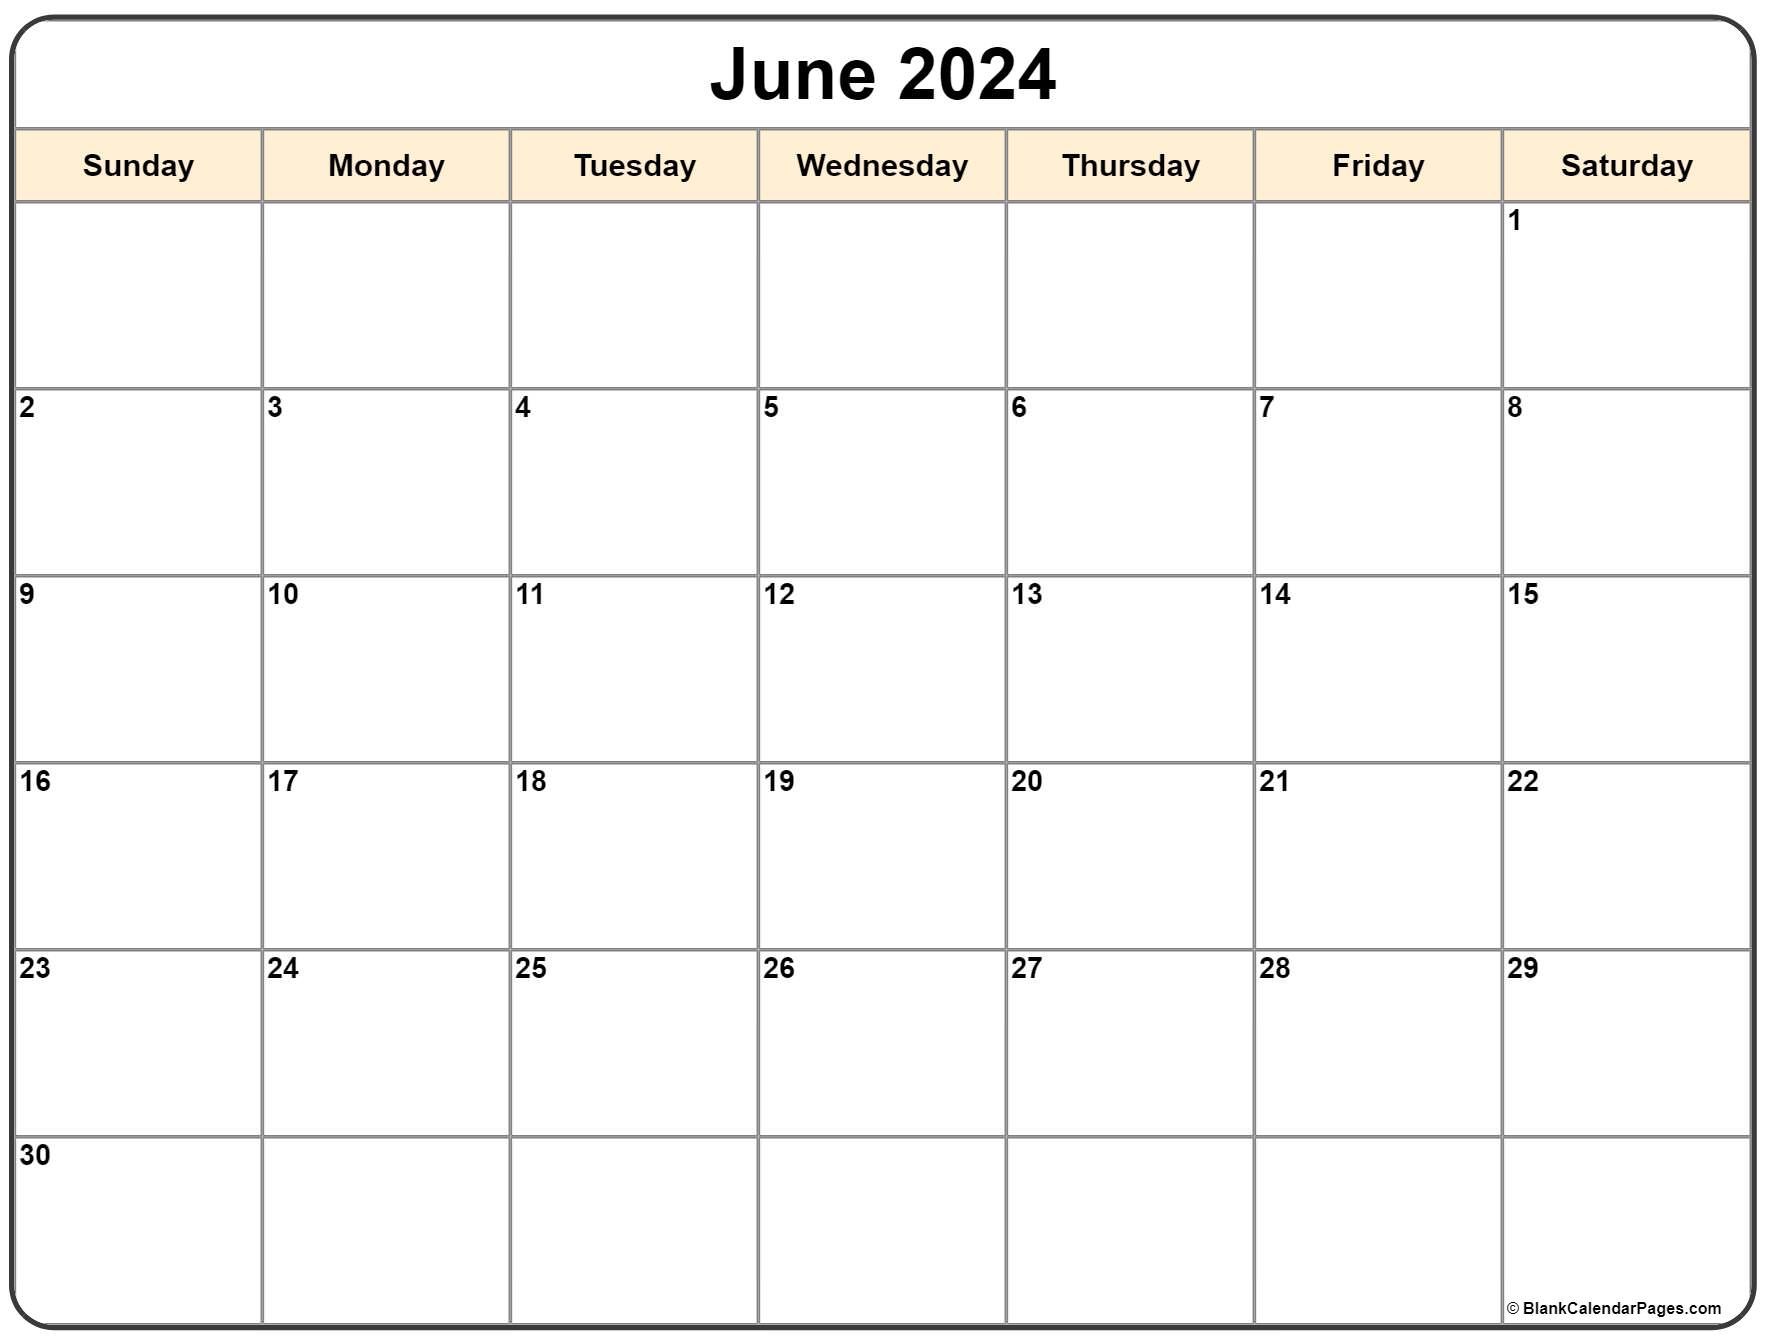 June 2022 calendar free printable monthly calendars